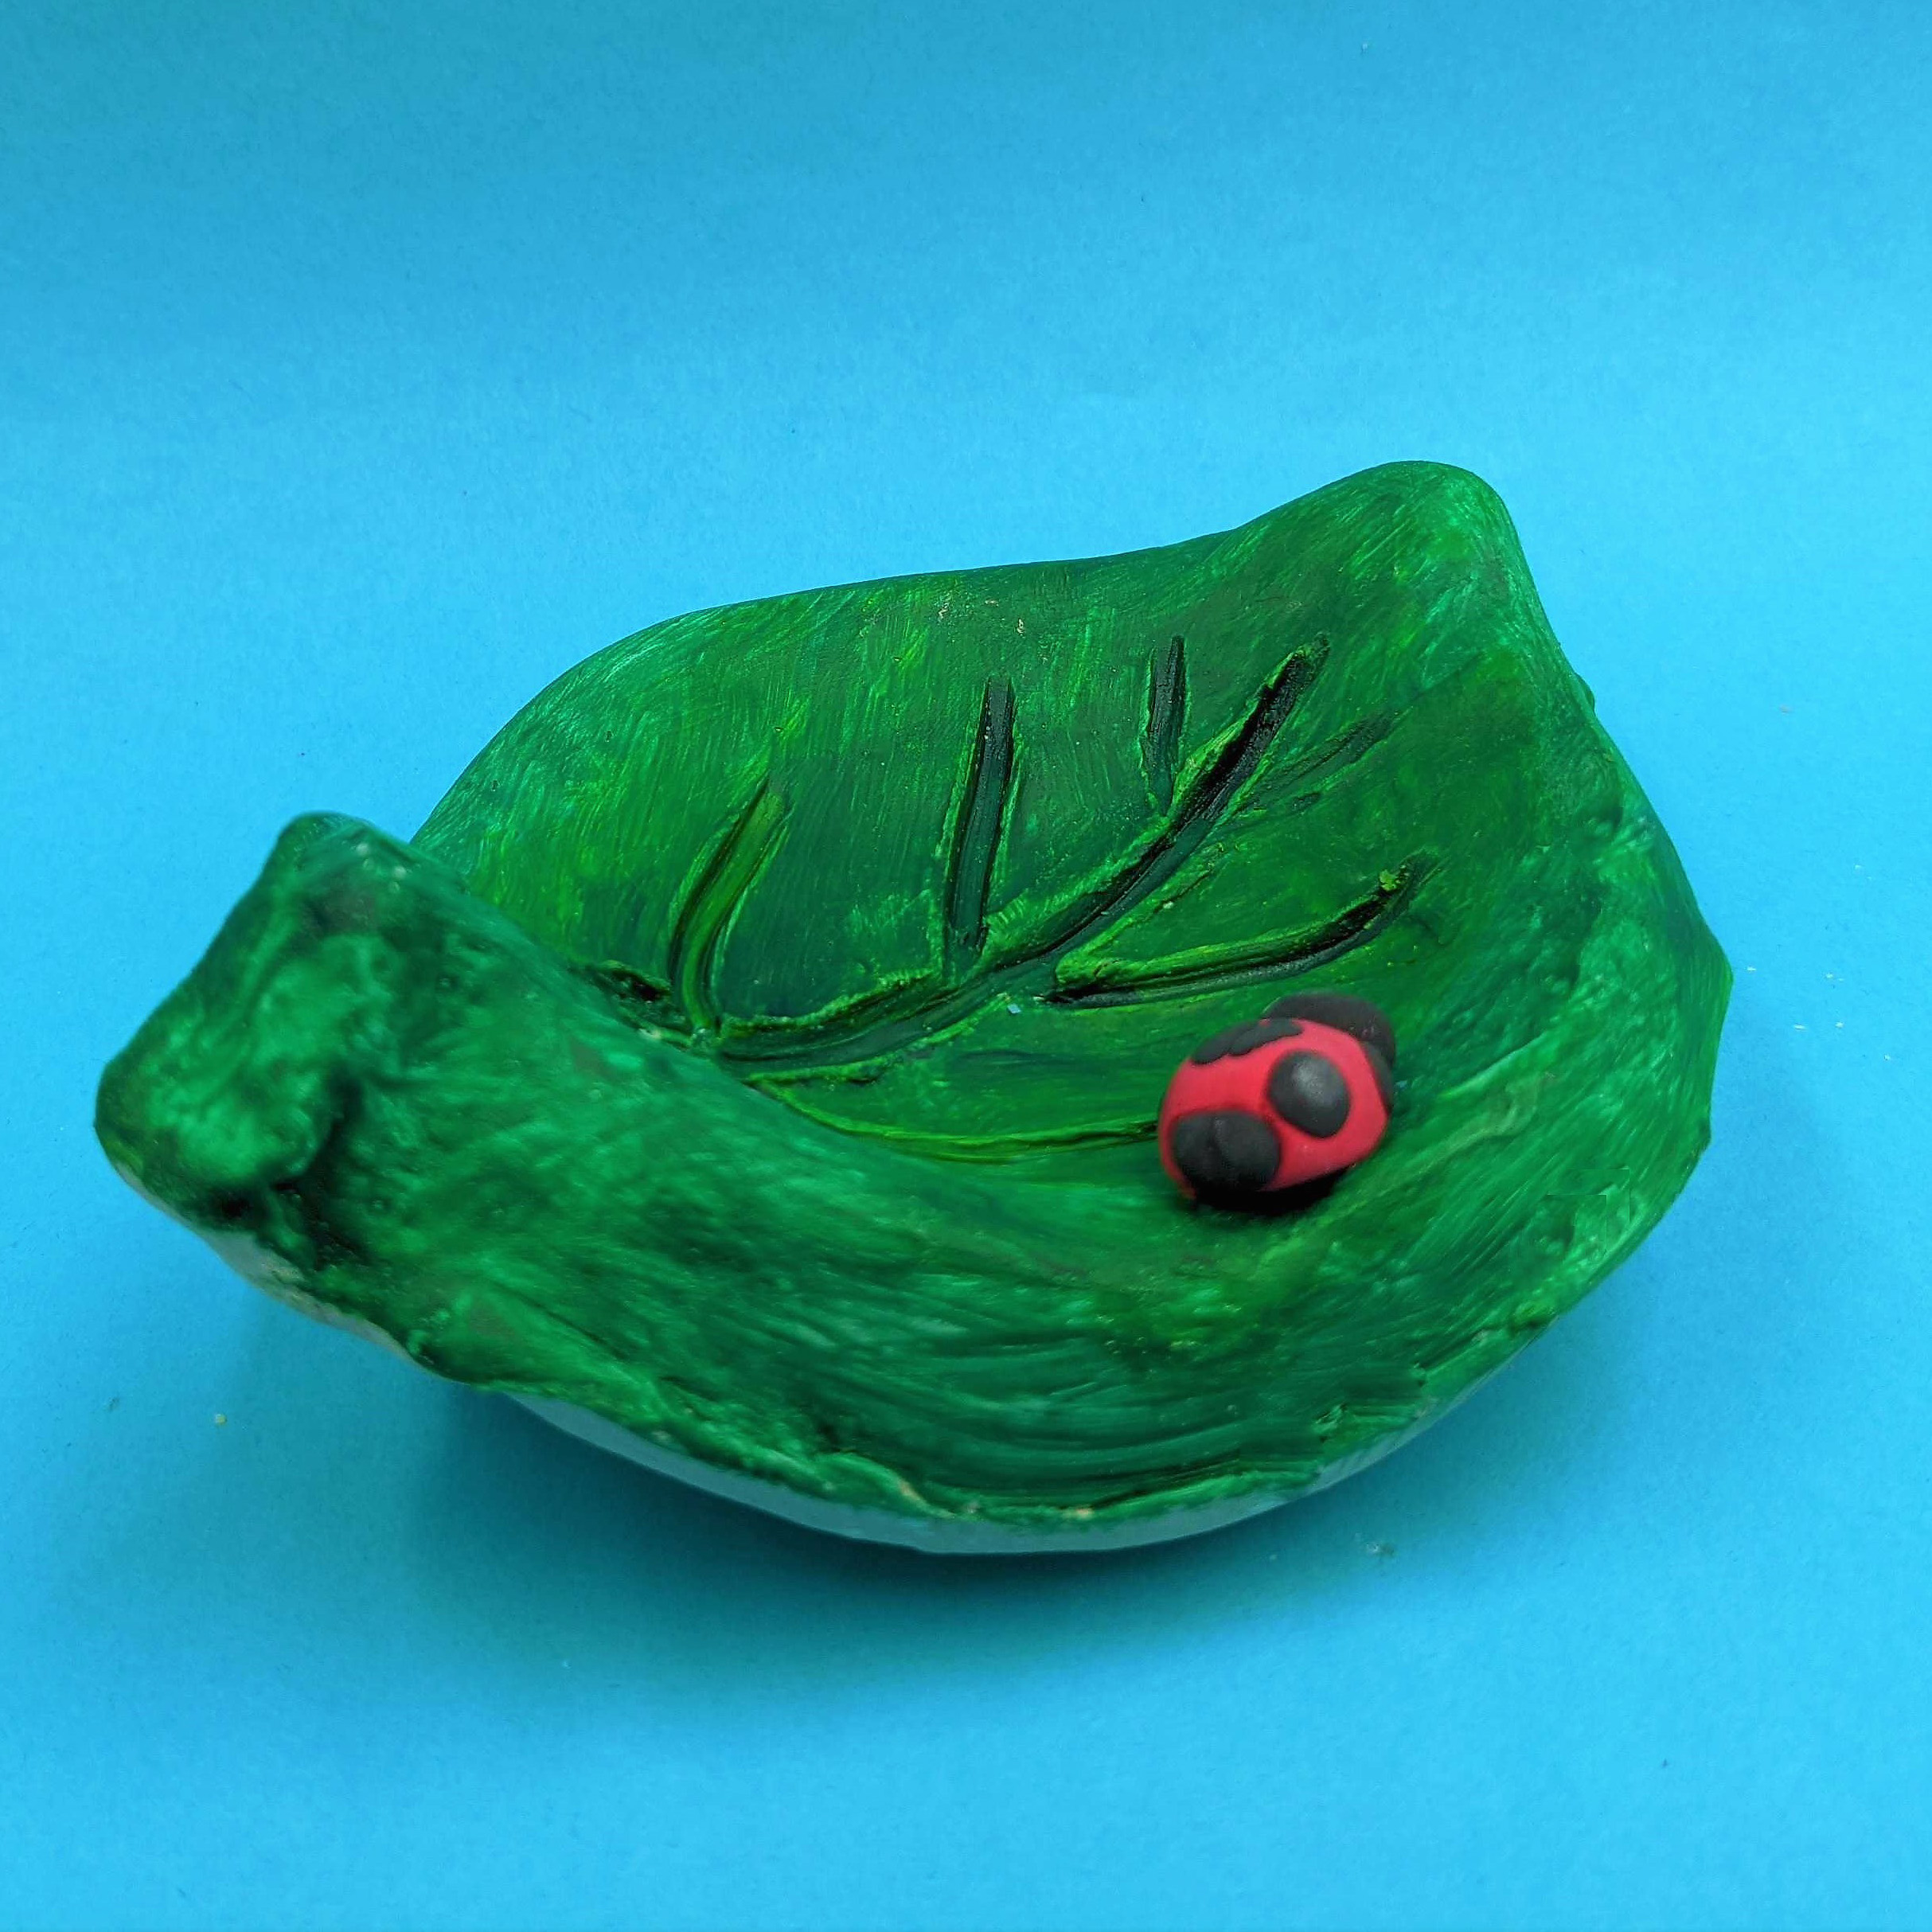 Kidcreate Mobile Studio - Fresno, Leaf bowl Art Project